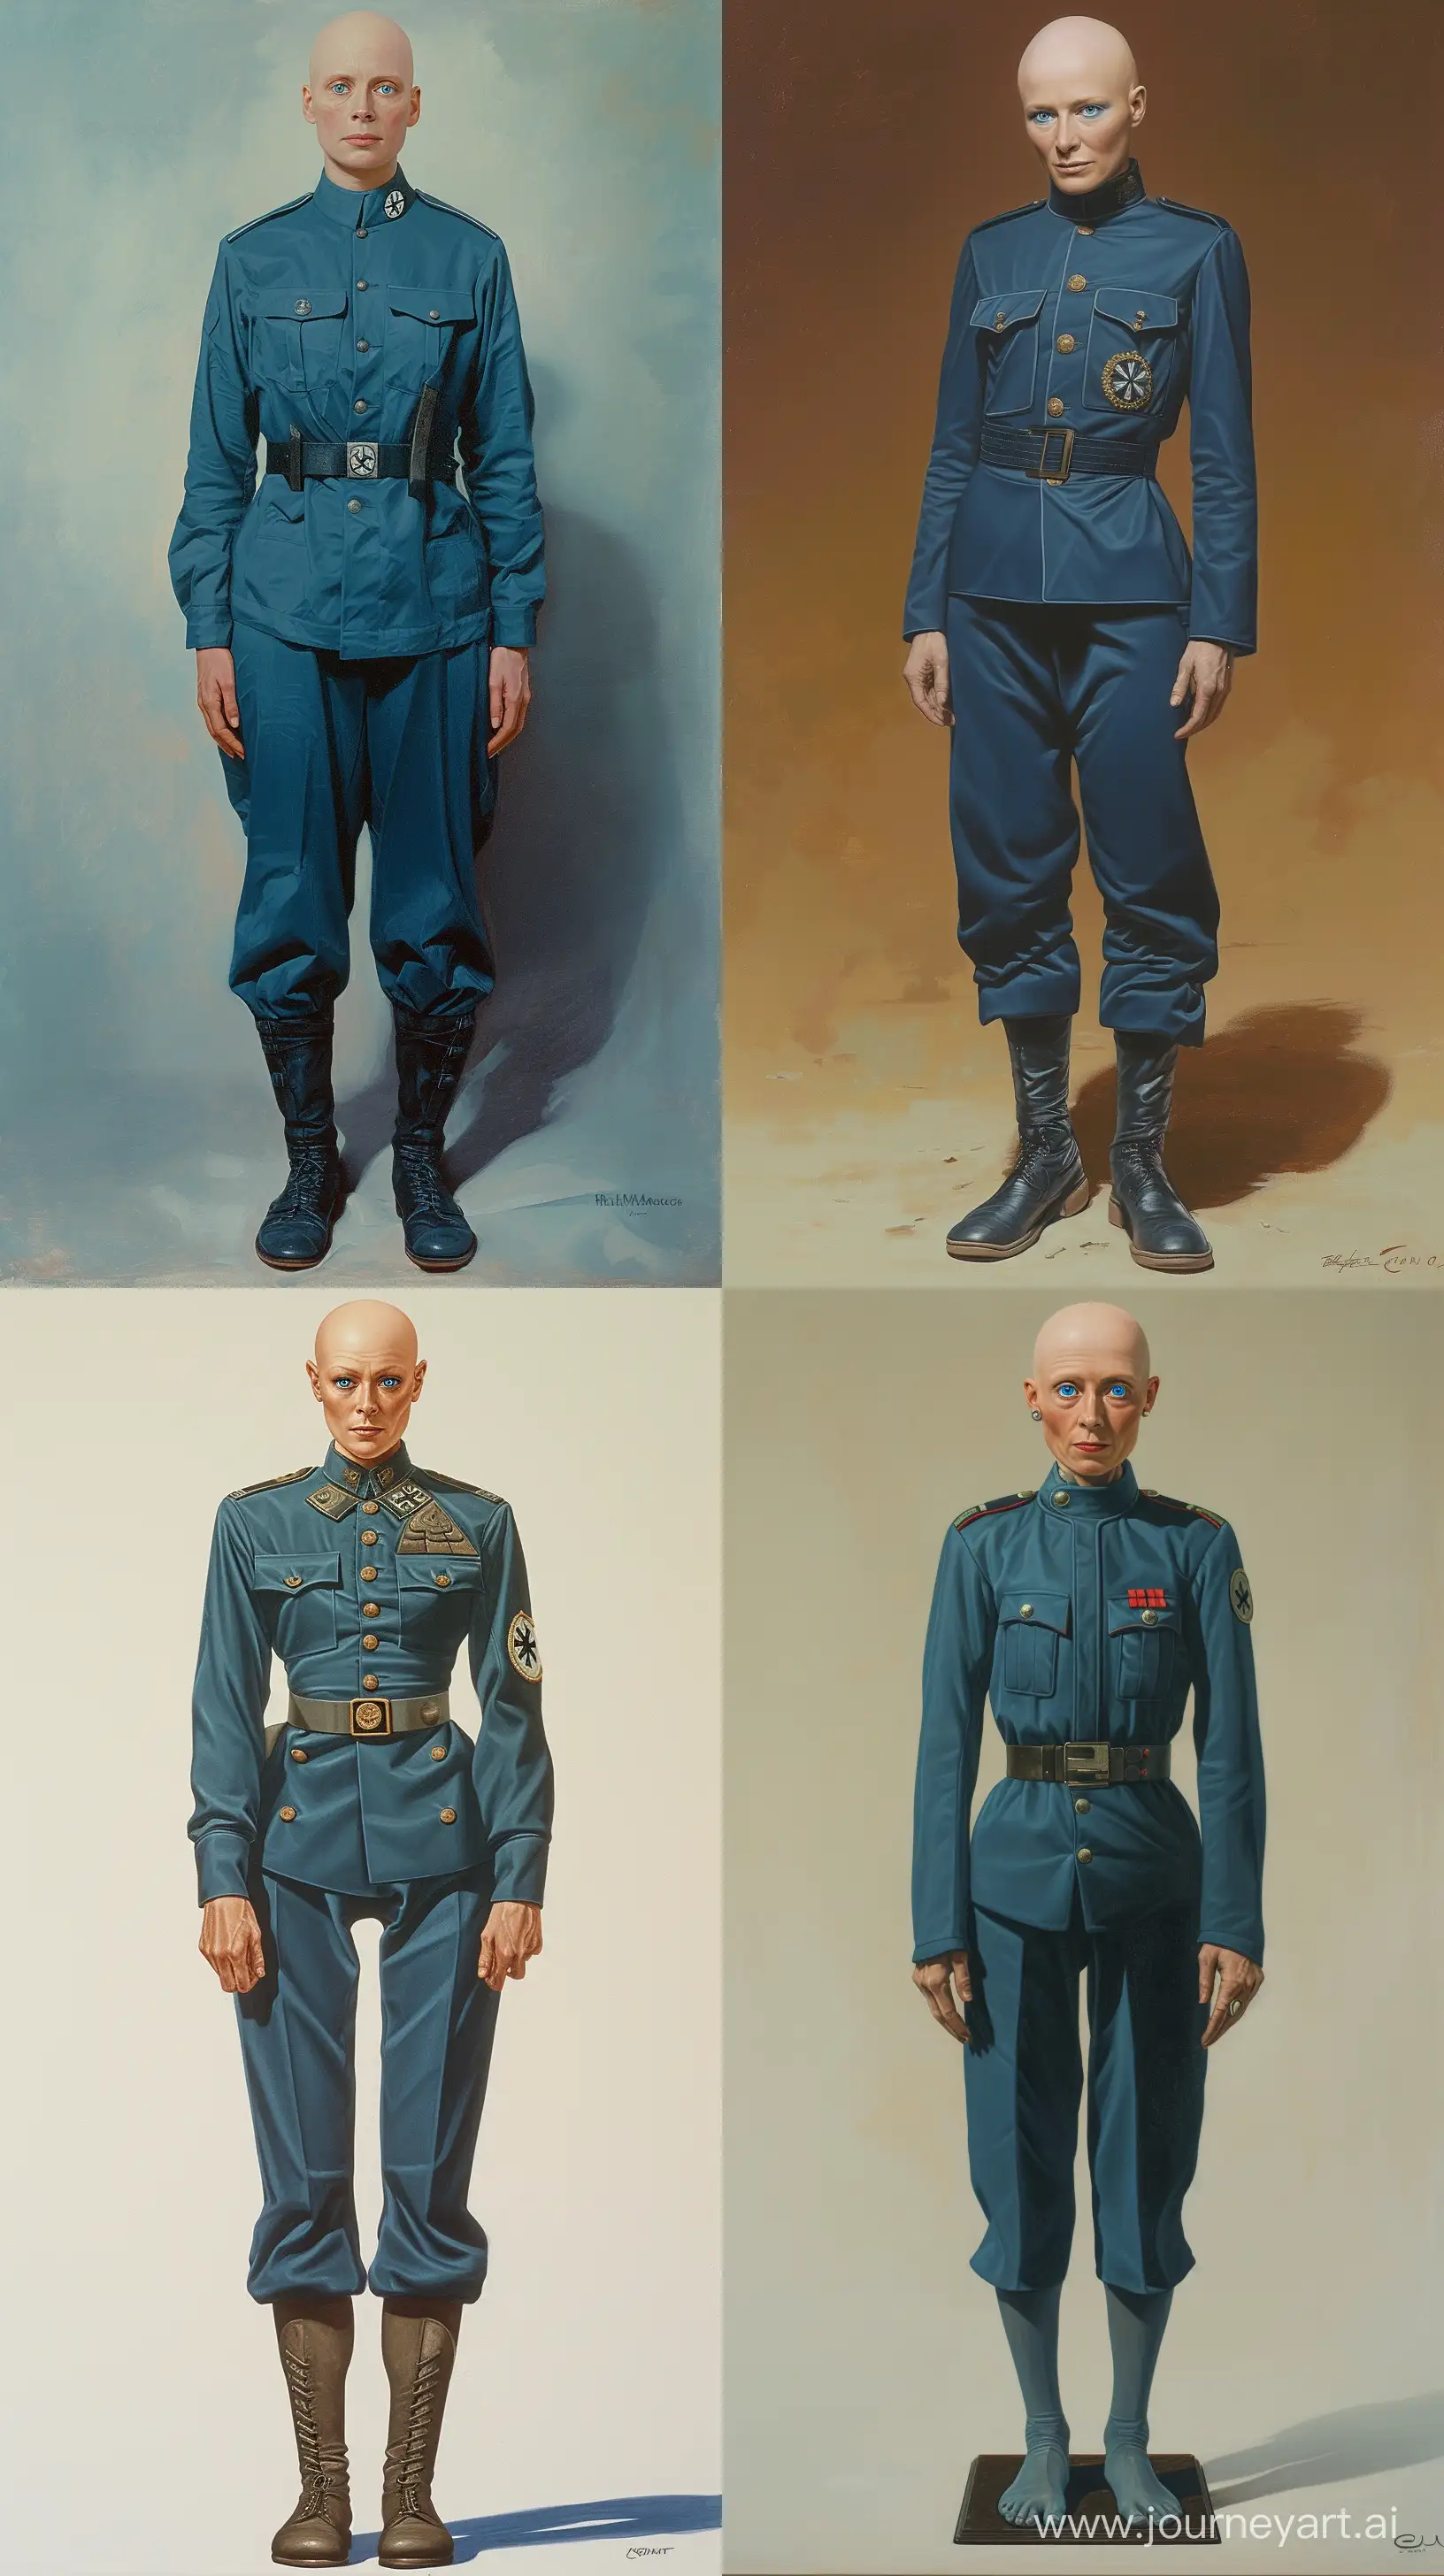 Retro-Science-Fiction-Portrait-Tall-Bald-Gillian-Anderson-in-Blue-WW2-German-Military-Dress-Uniform-by-Ralph-McQuarrie